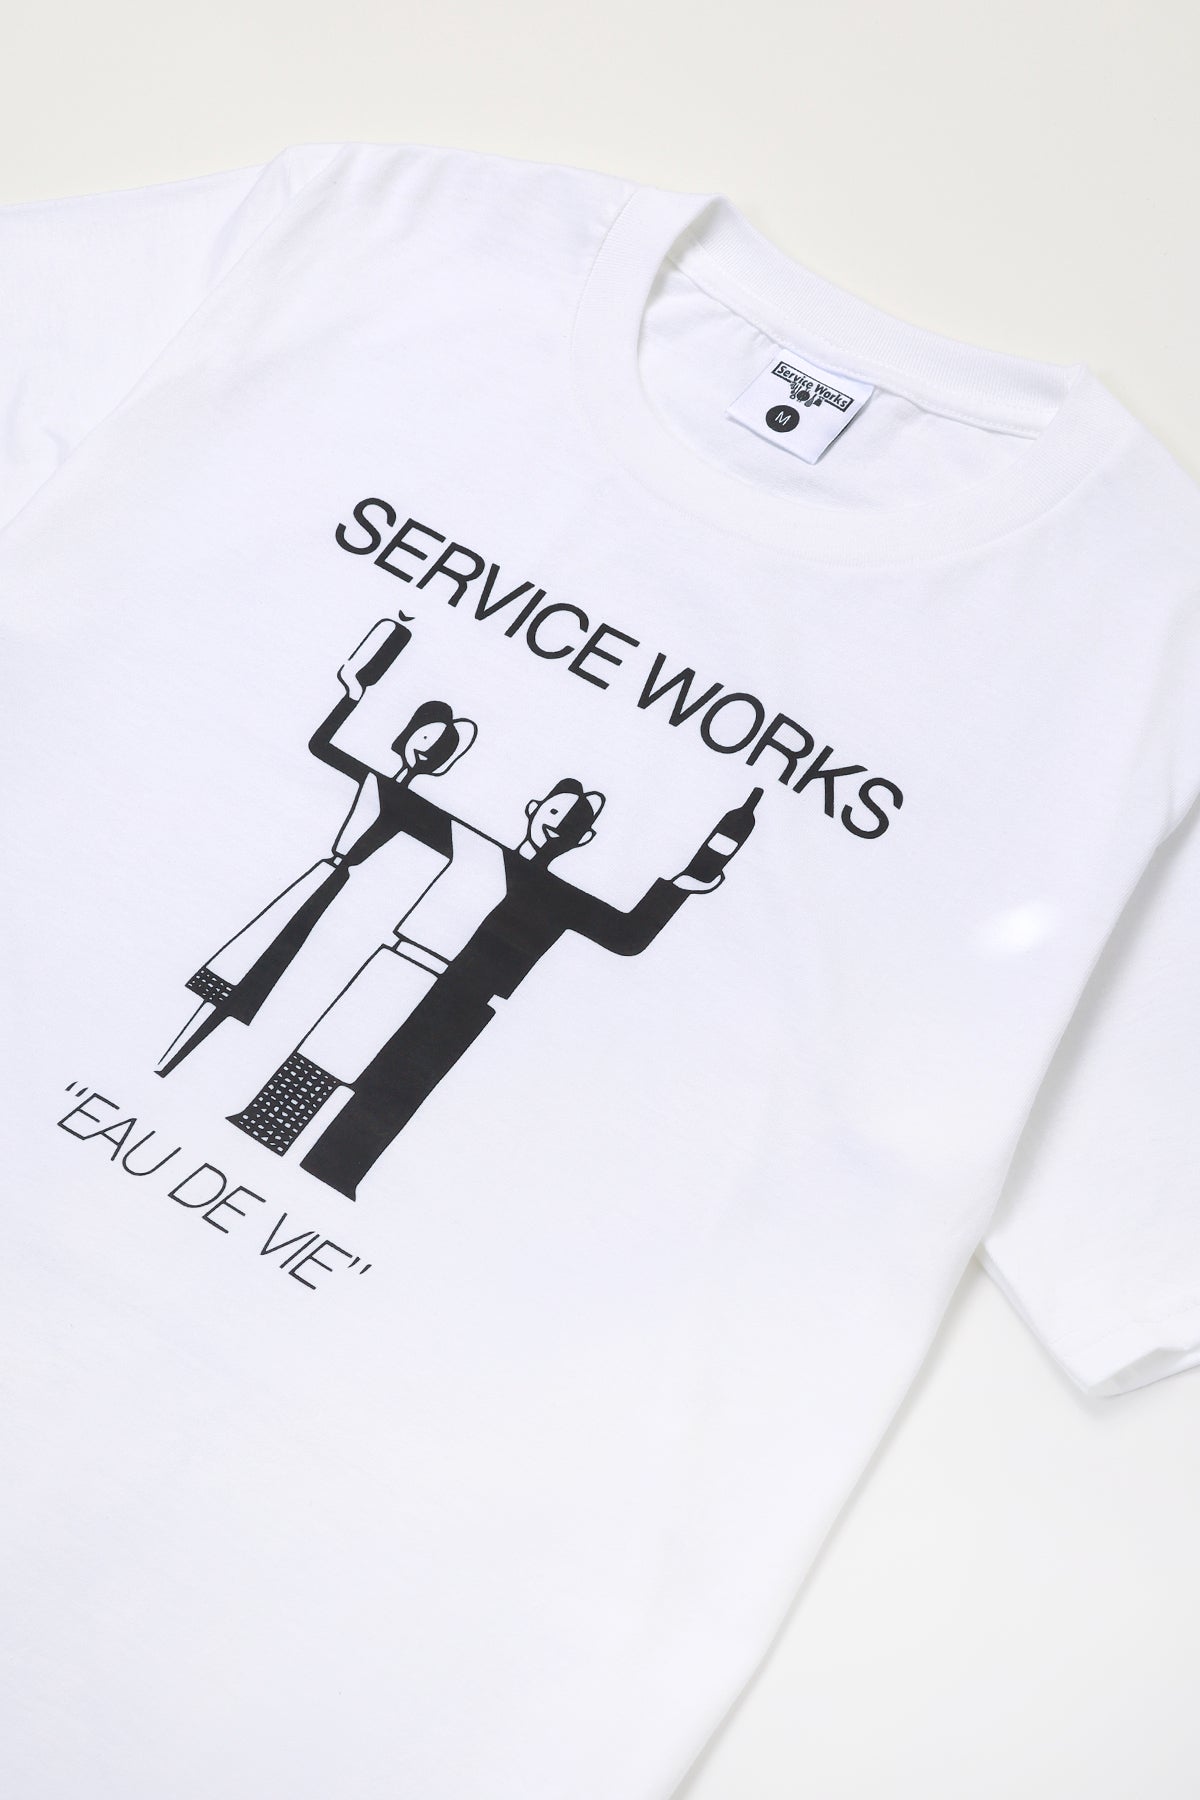 Service Works - Eau De Vie Tee - White